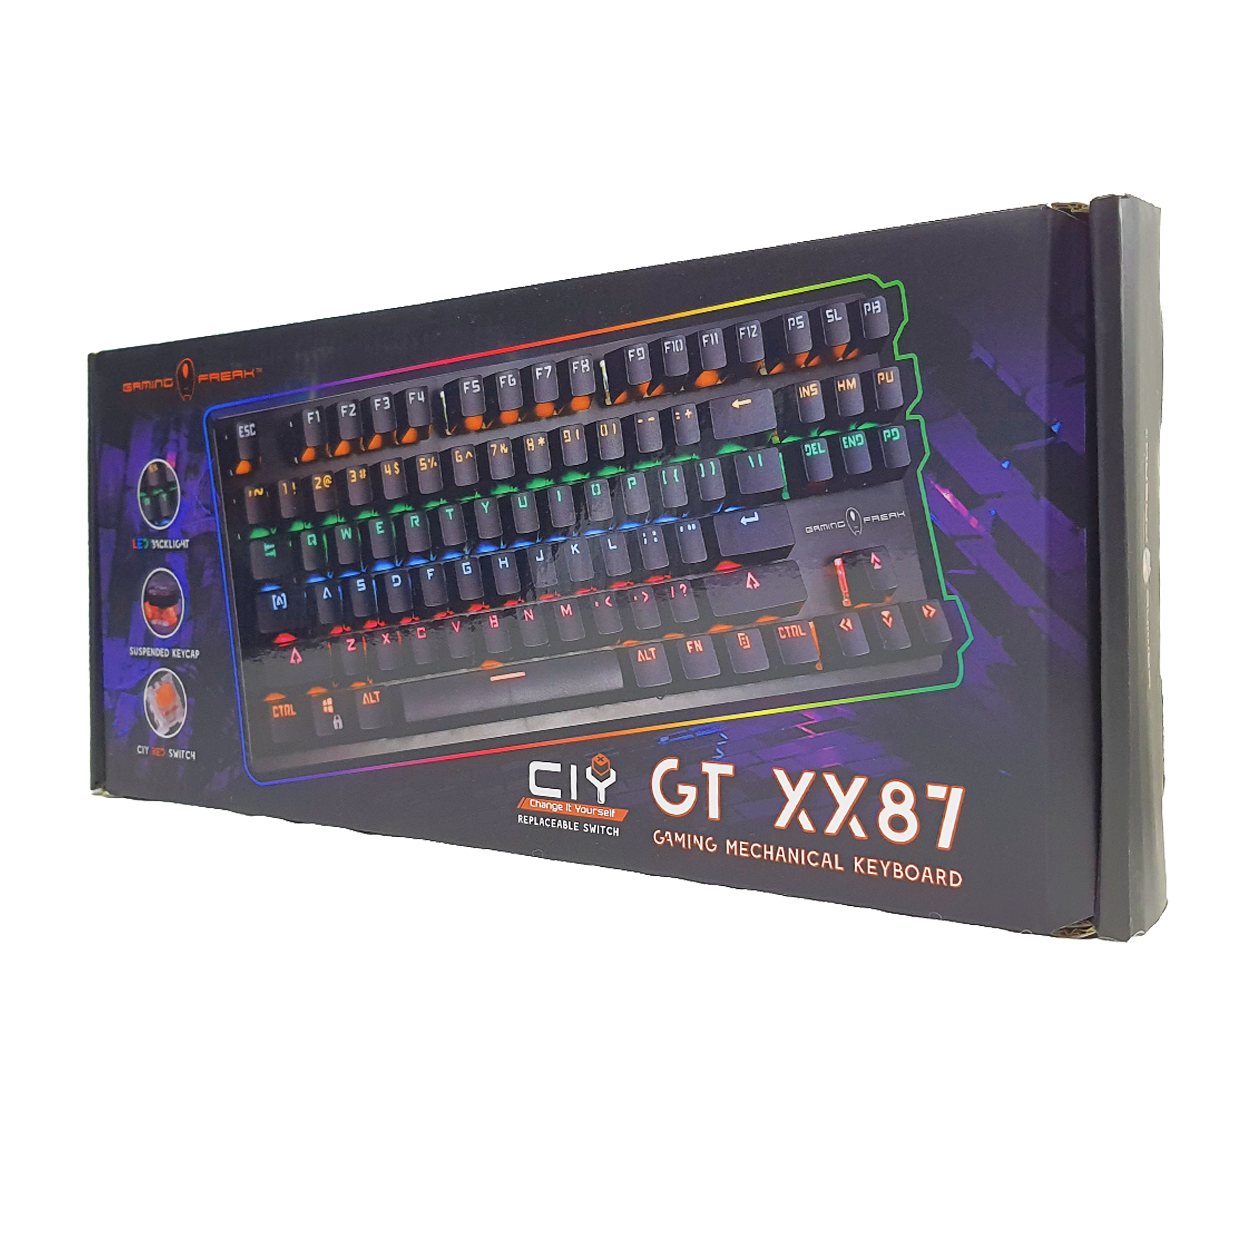 GK-GTXX87-RD Gaming Mechanical Keyboard